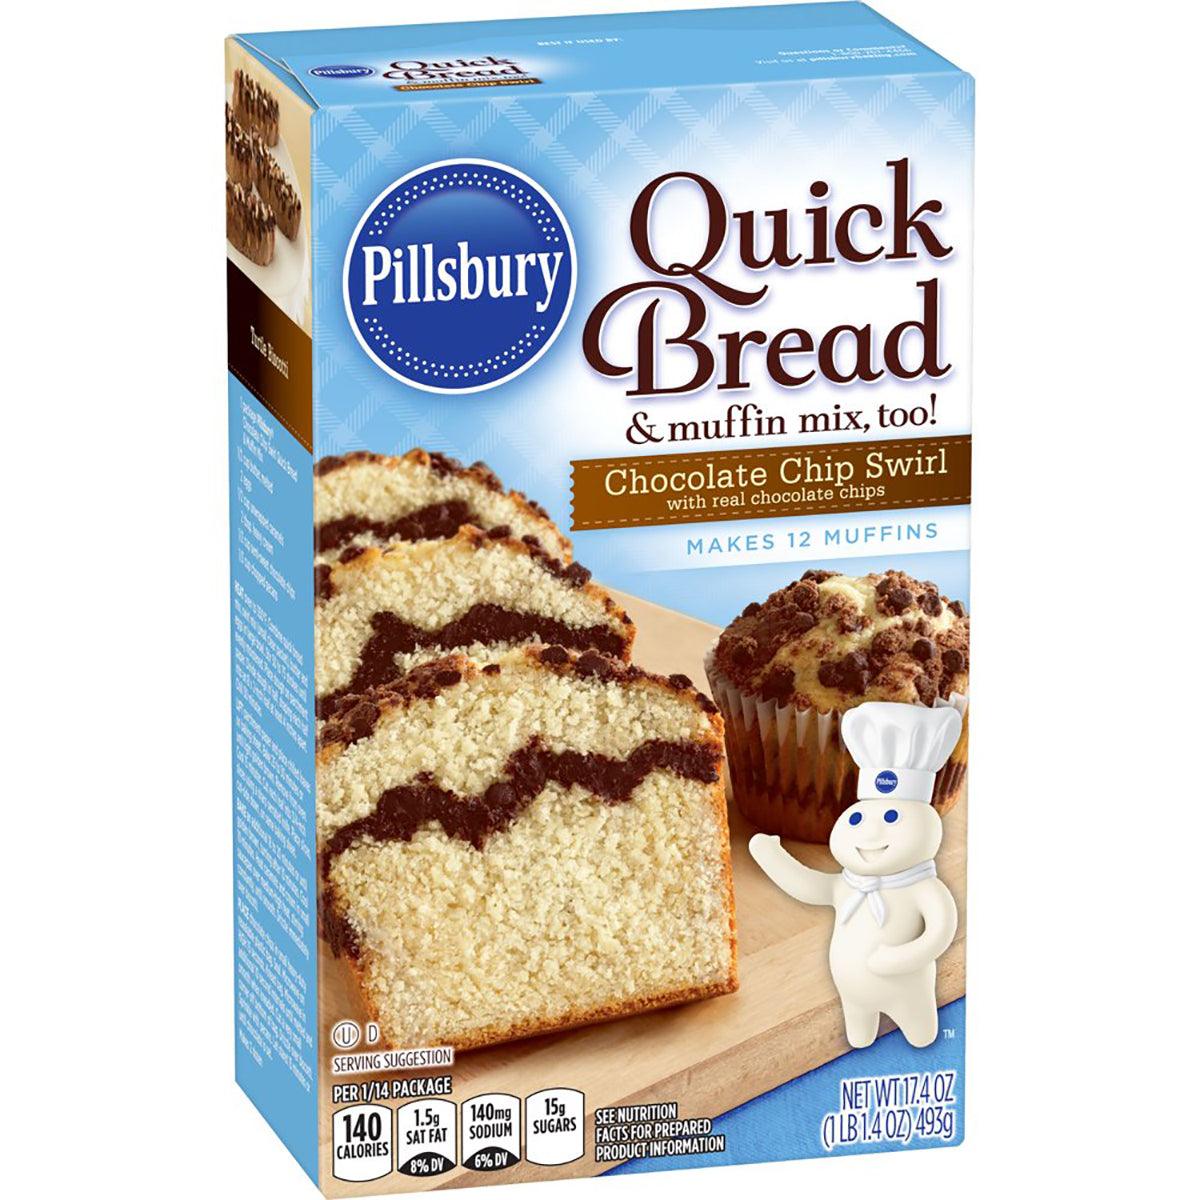 Pillsbury Choc Chip Quick Bread 17.4z